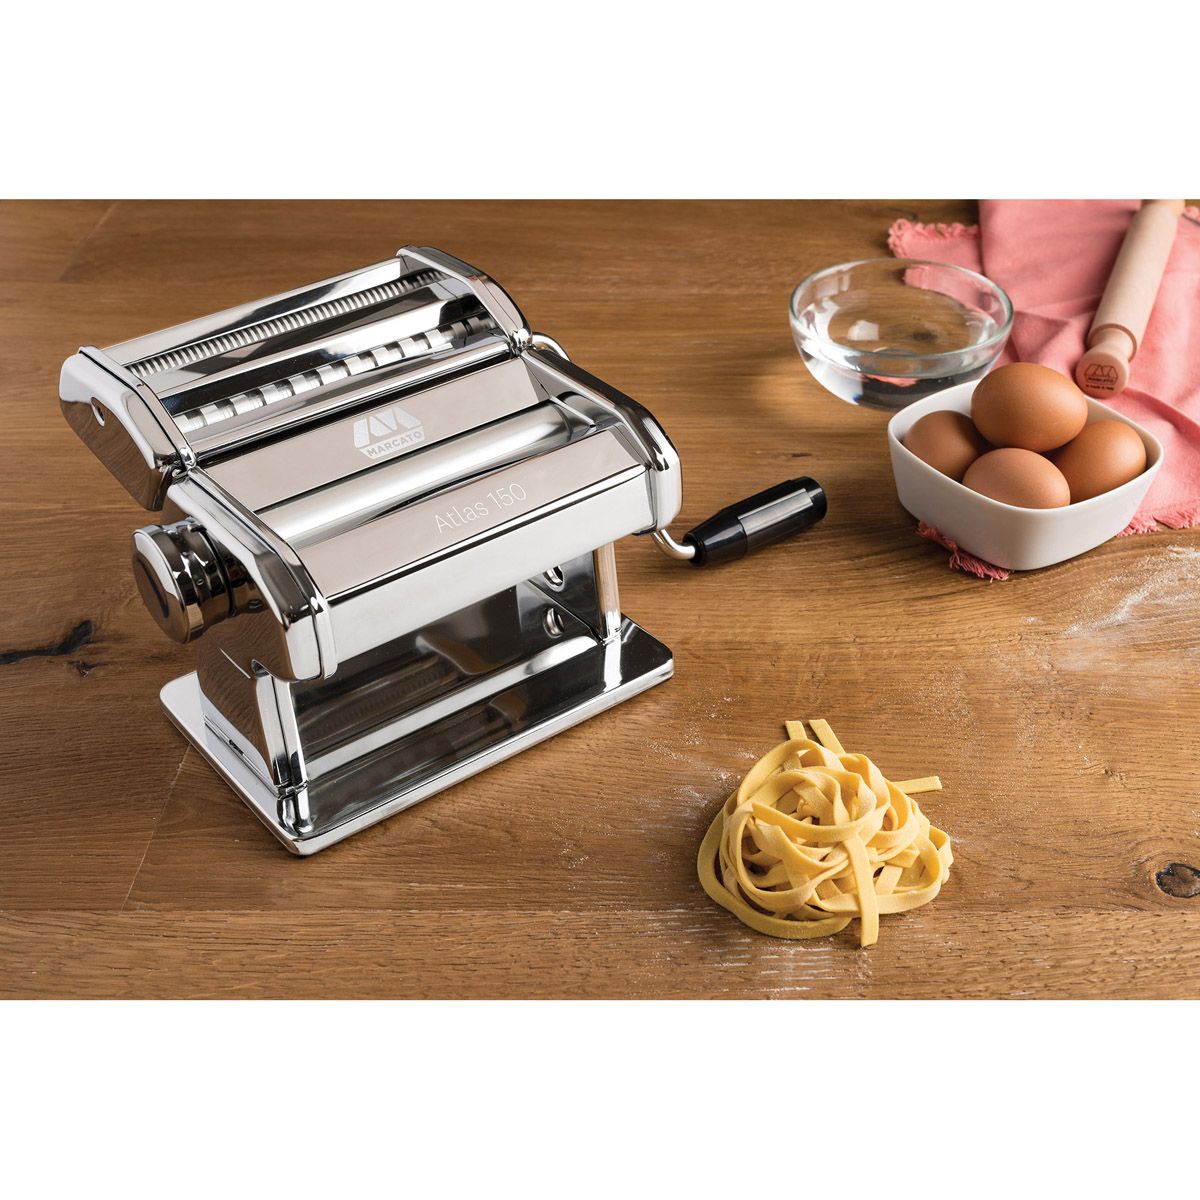  MARCATO 150 Pasta device : Home & Kitchen